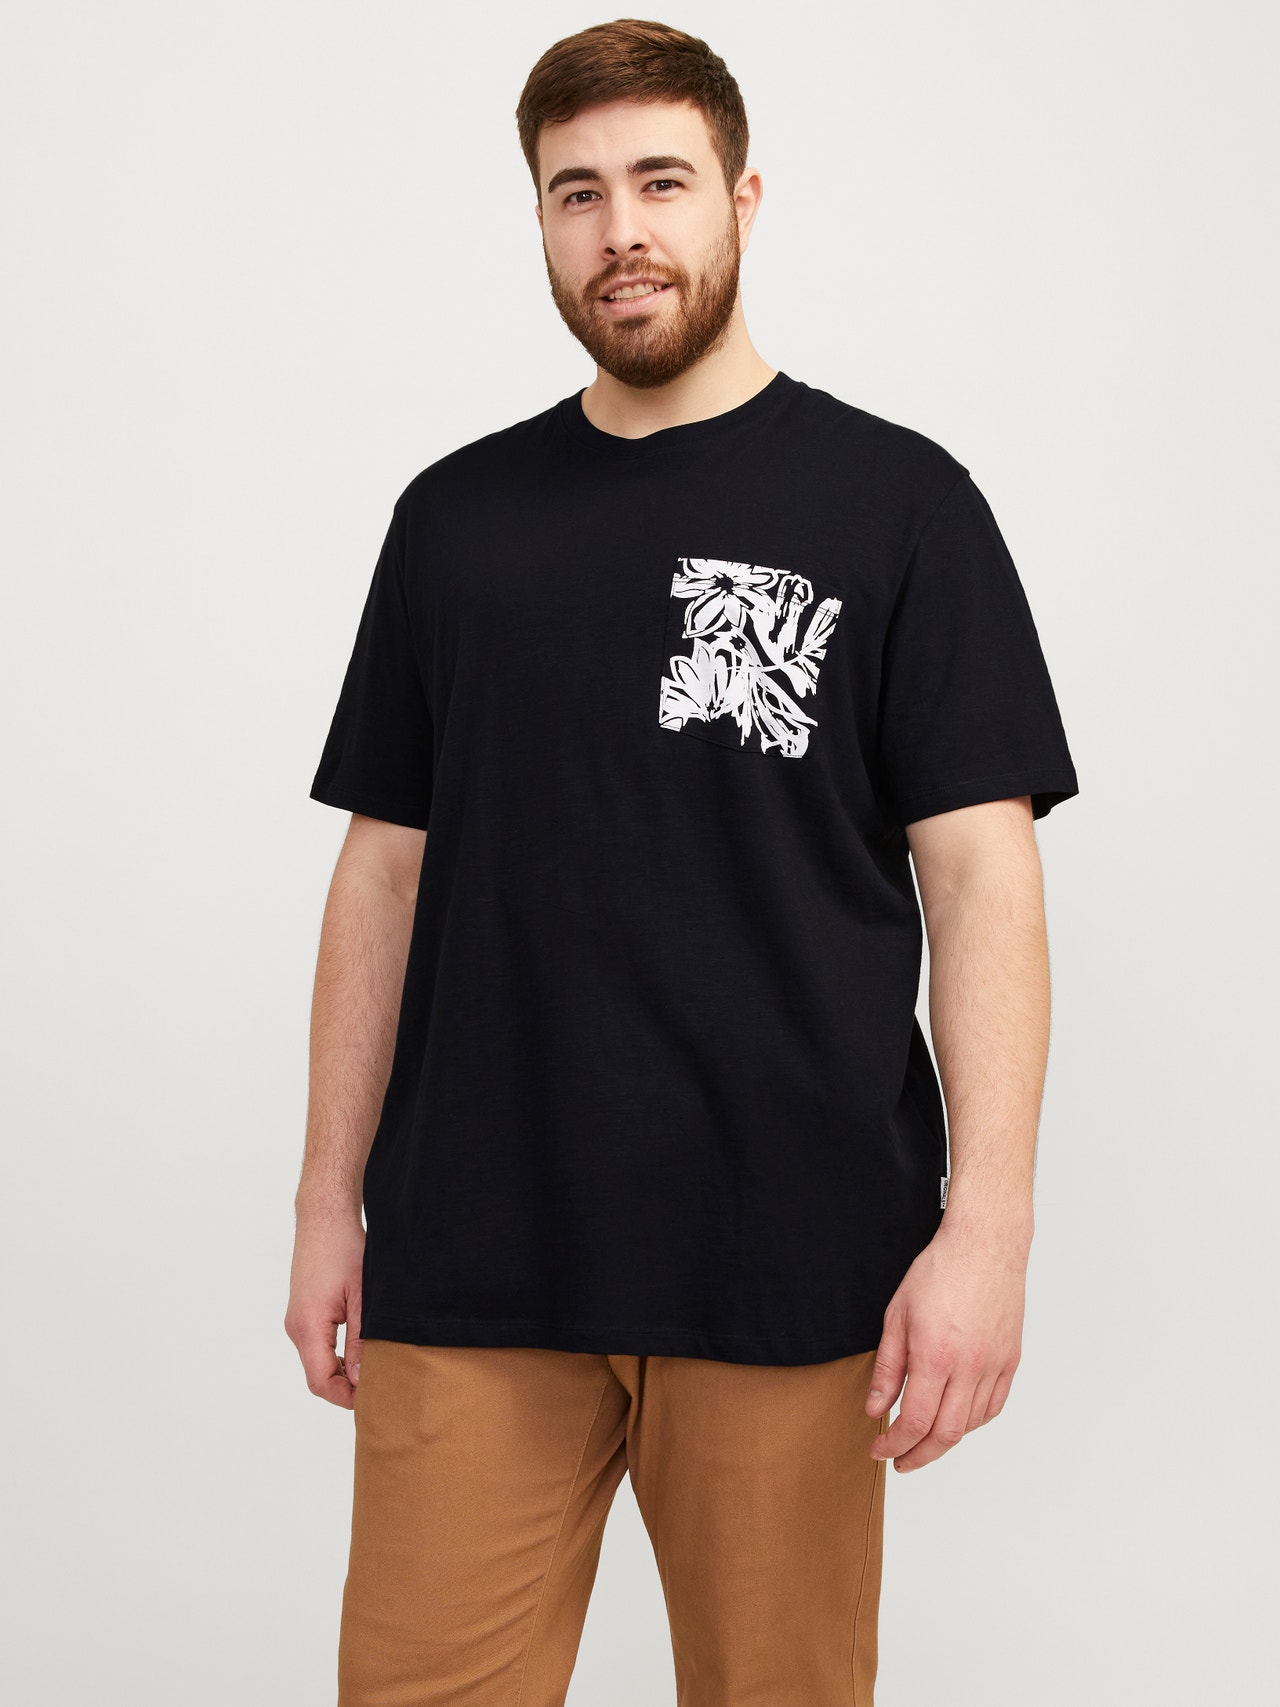 Jack & Jones Plus Size T-shirt Stampato -Black - 12257516